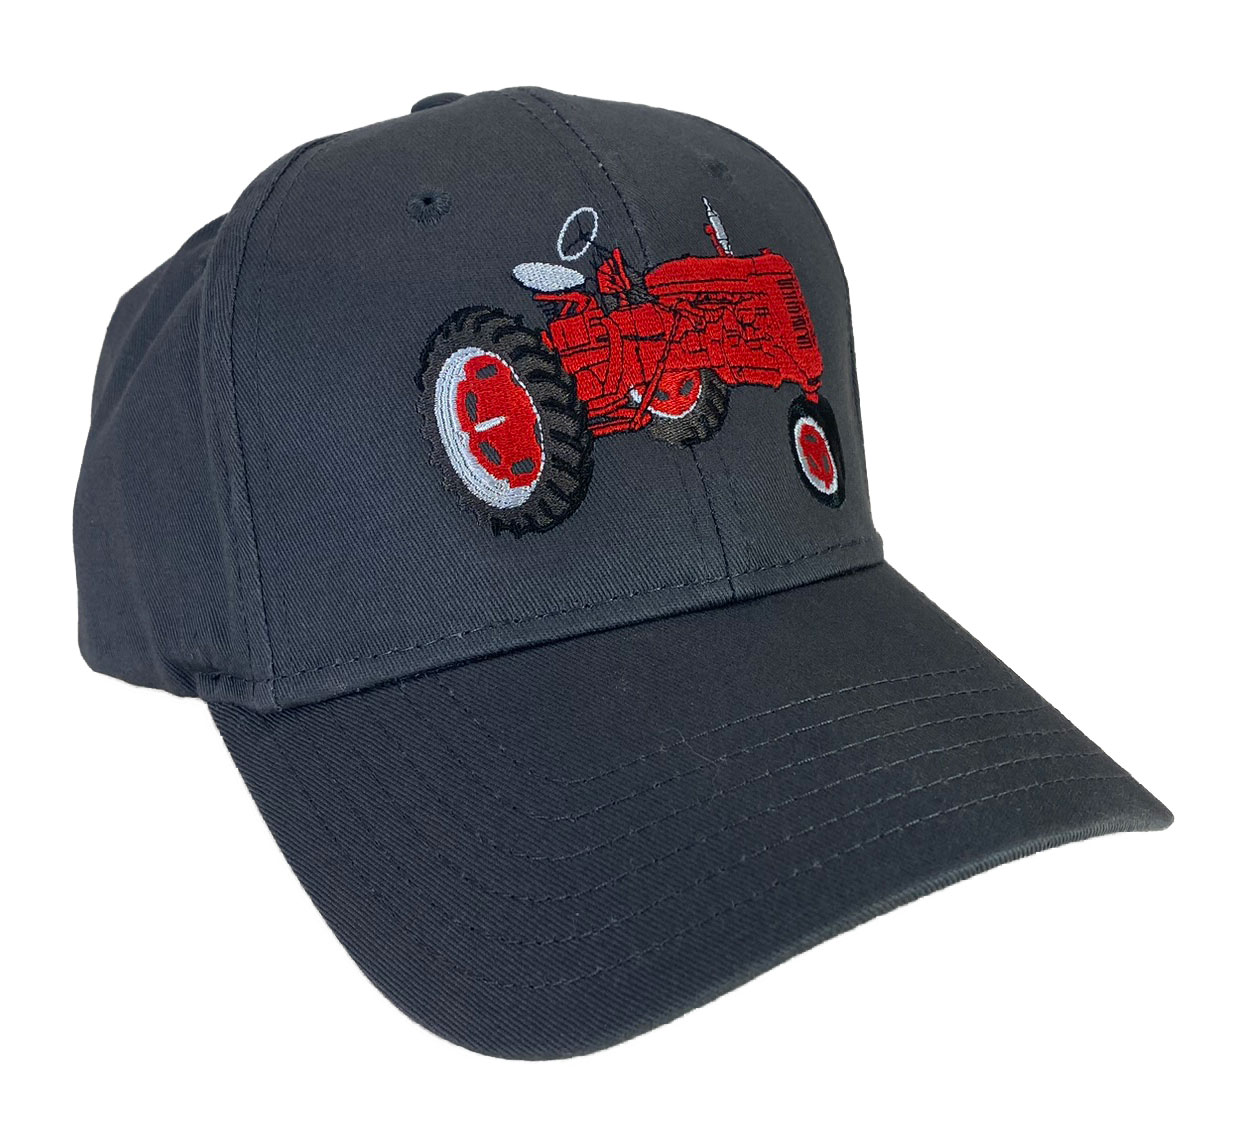 Locomotive Tractor International Embroidered Hat Cap Red - Farmall McCormick #44-8000CGV Logos